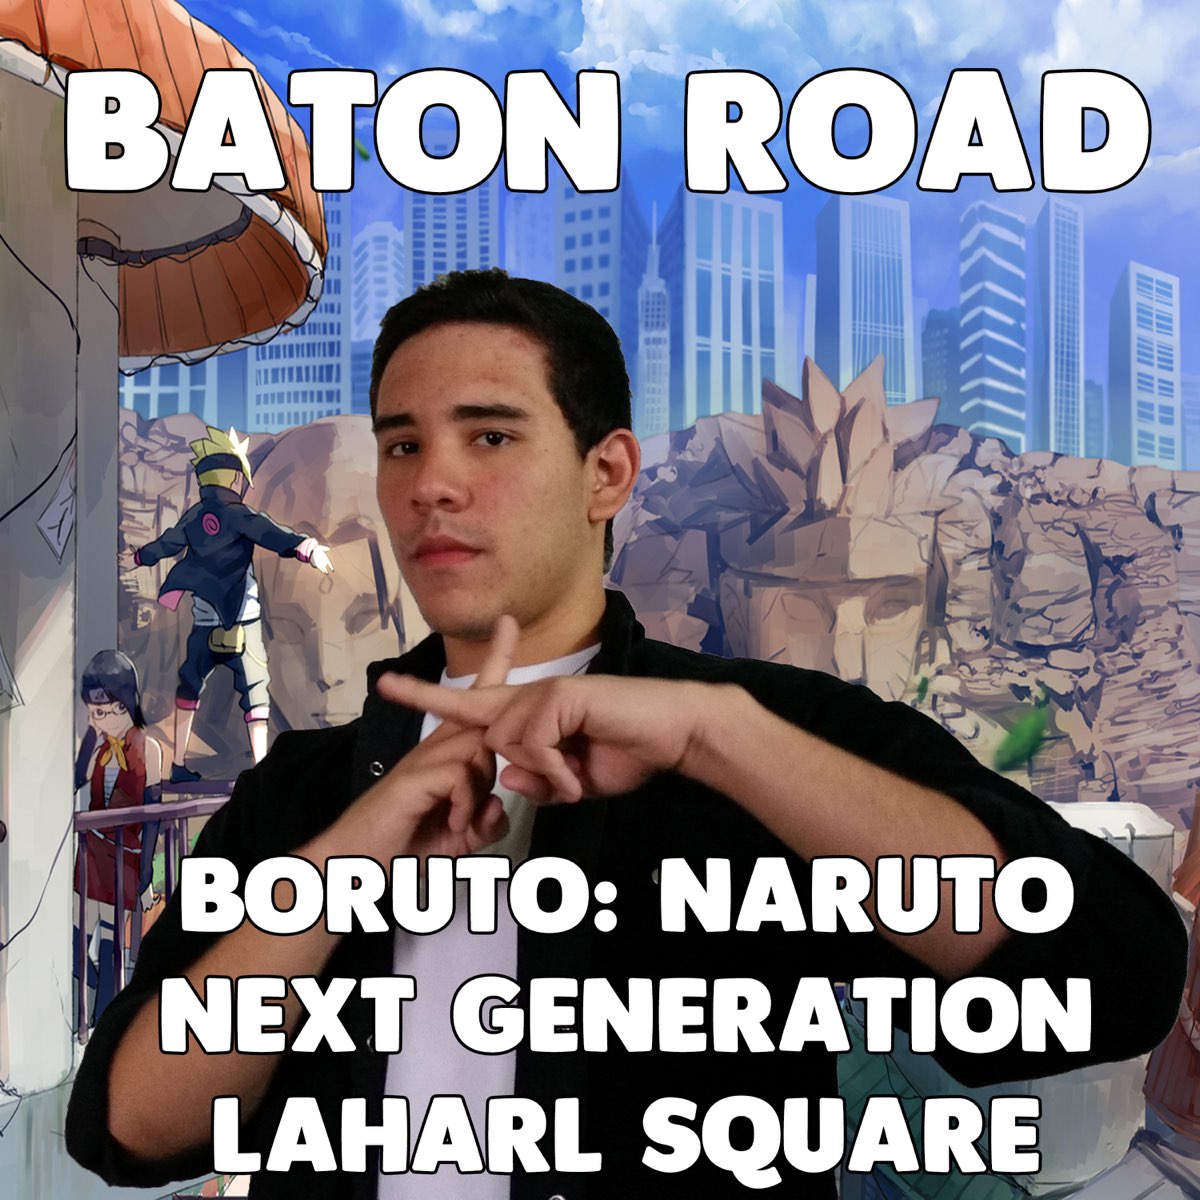 Boruto Opening 1  Baton Road (HD) 